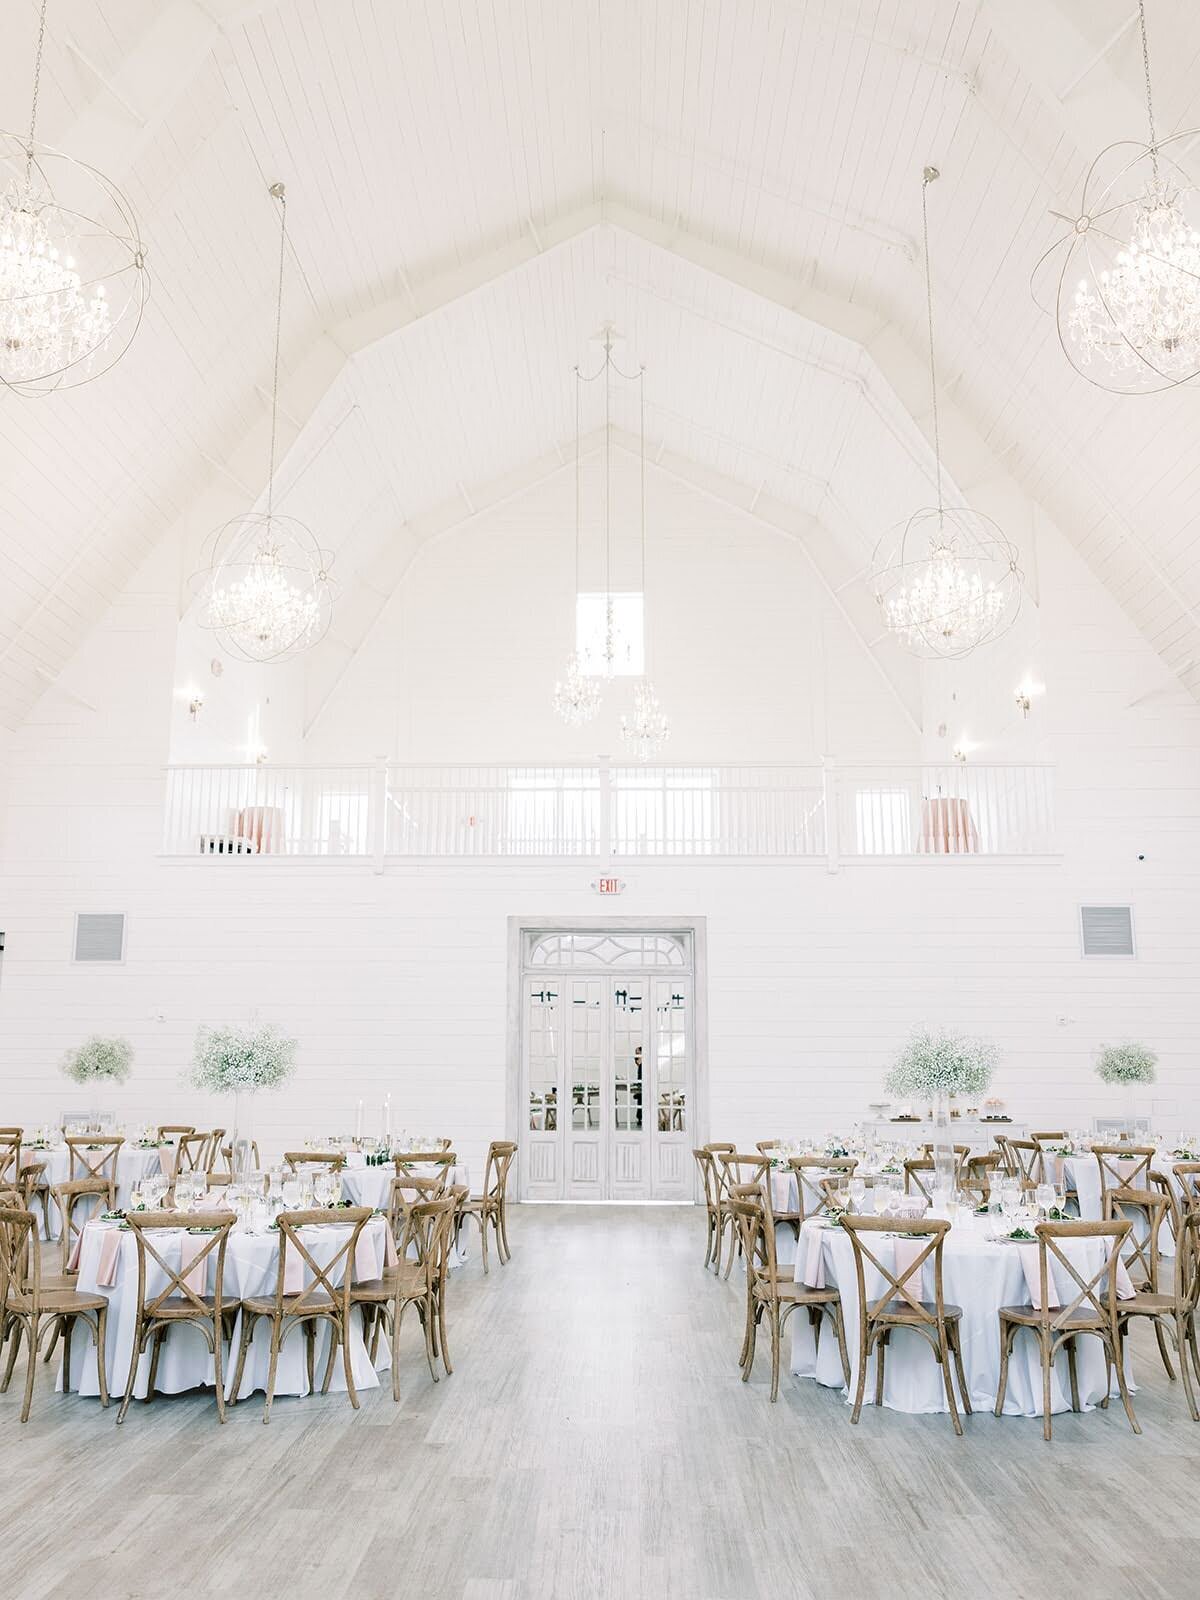 Pristine white barn wedding venue set up for wedding reception